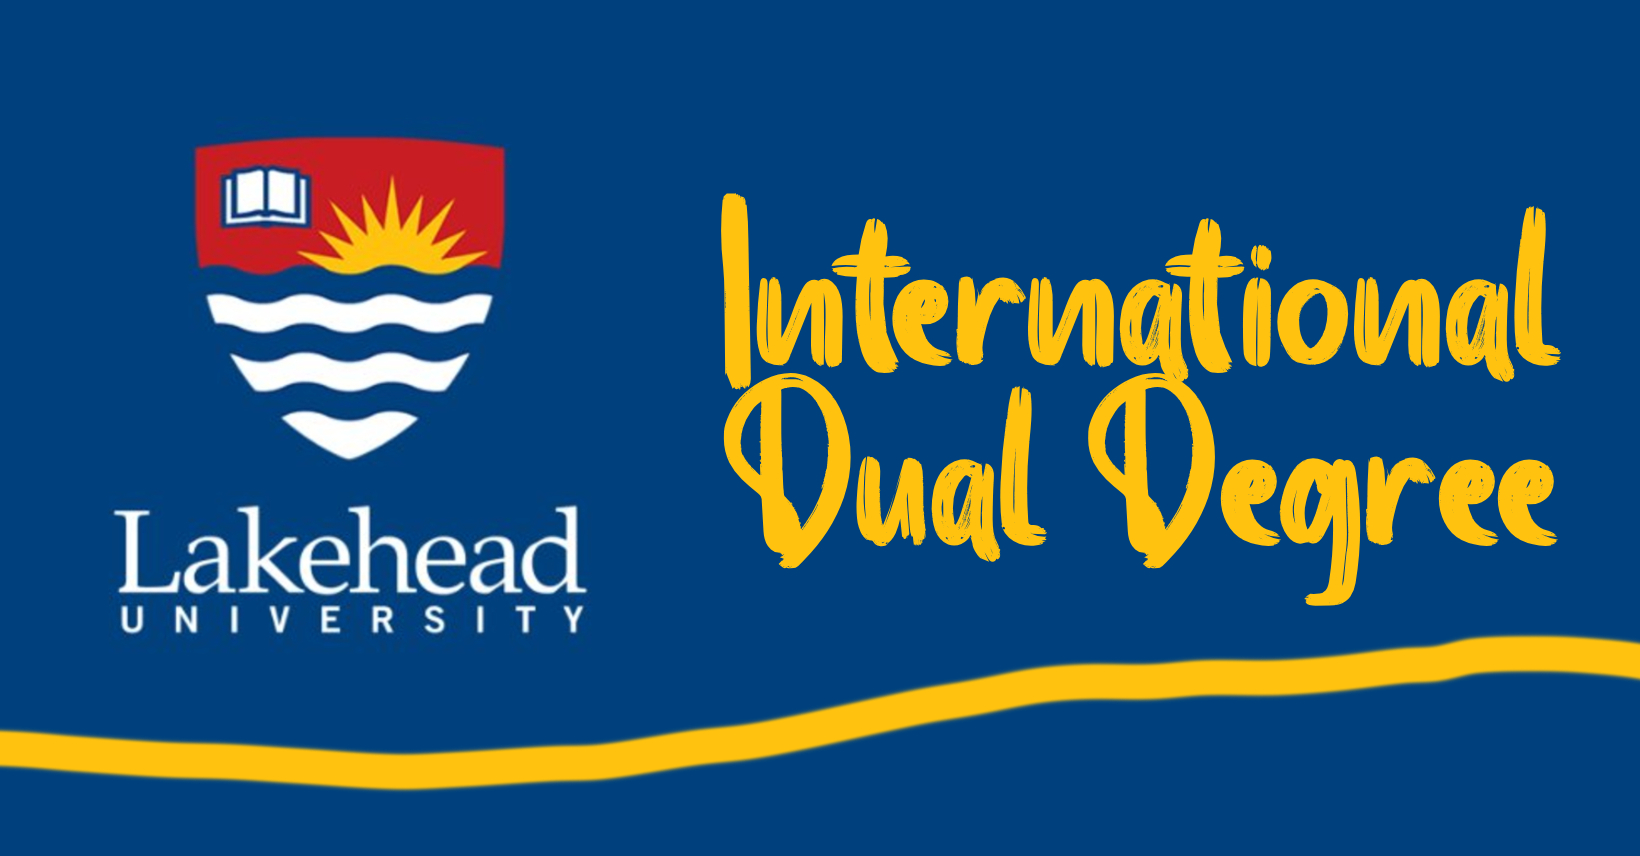 International Dual Degree words and Lakehead Logos